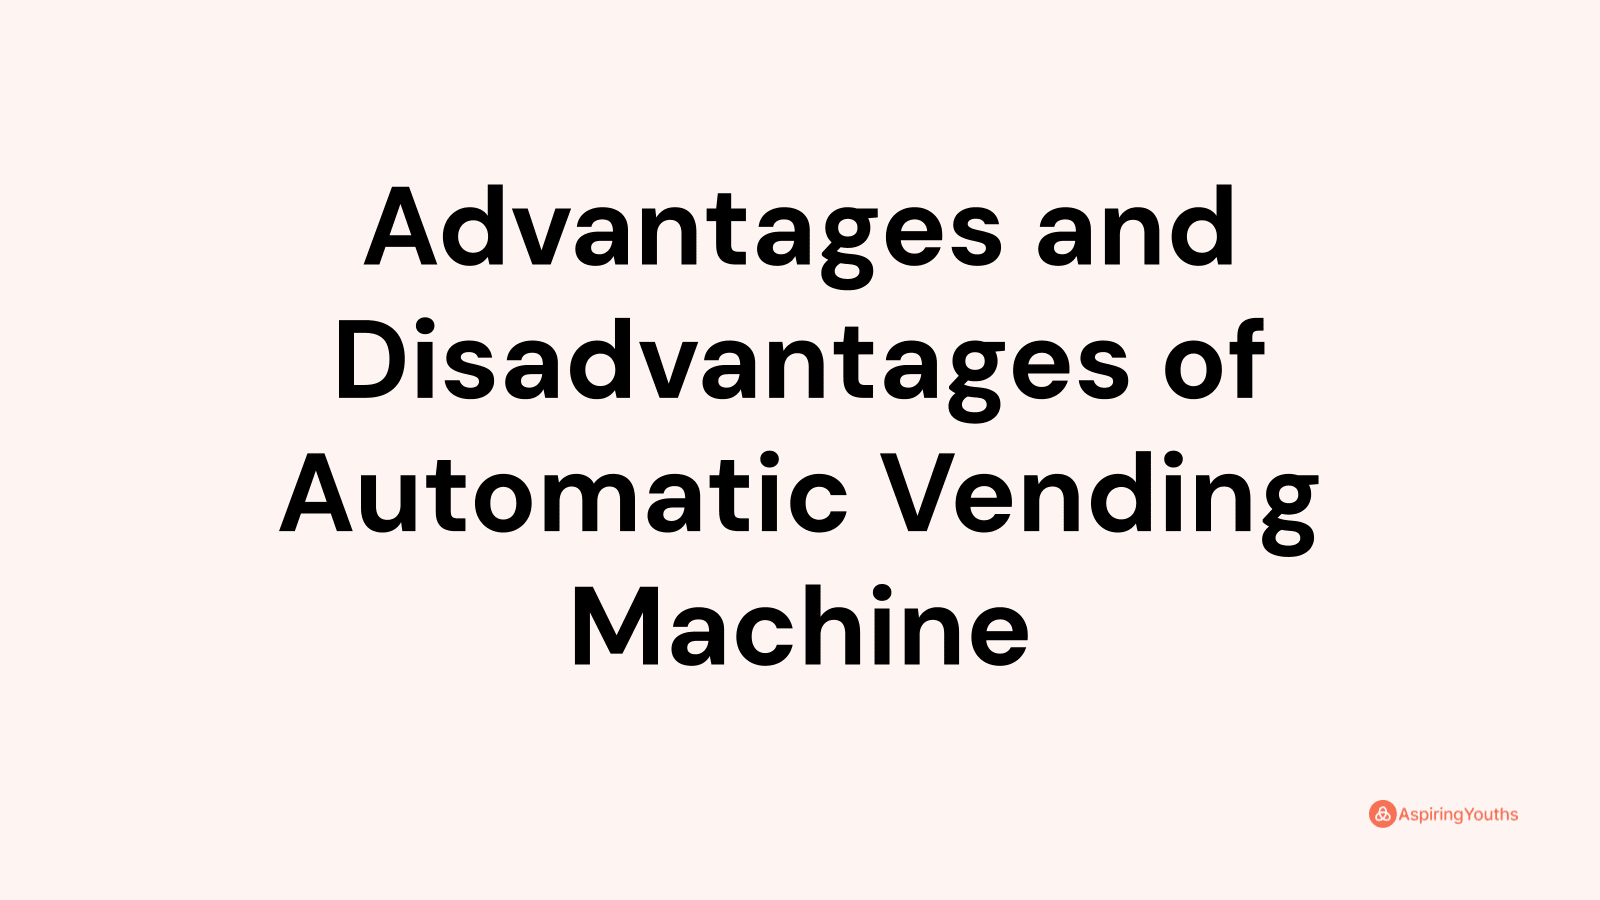 Advantages and disadvantages of Automatic Vending Machine